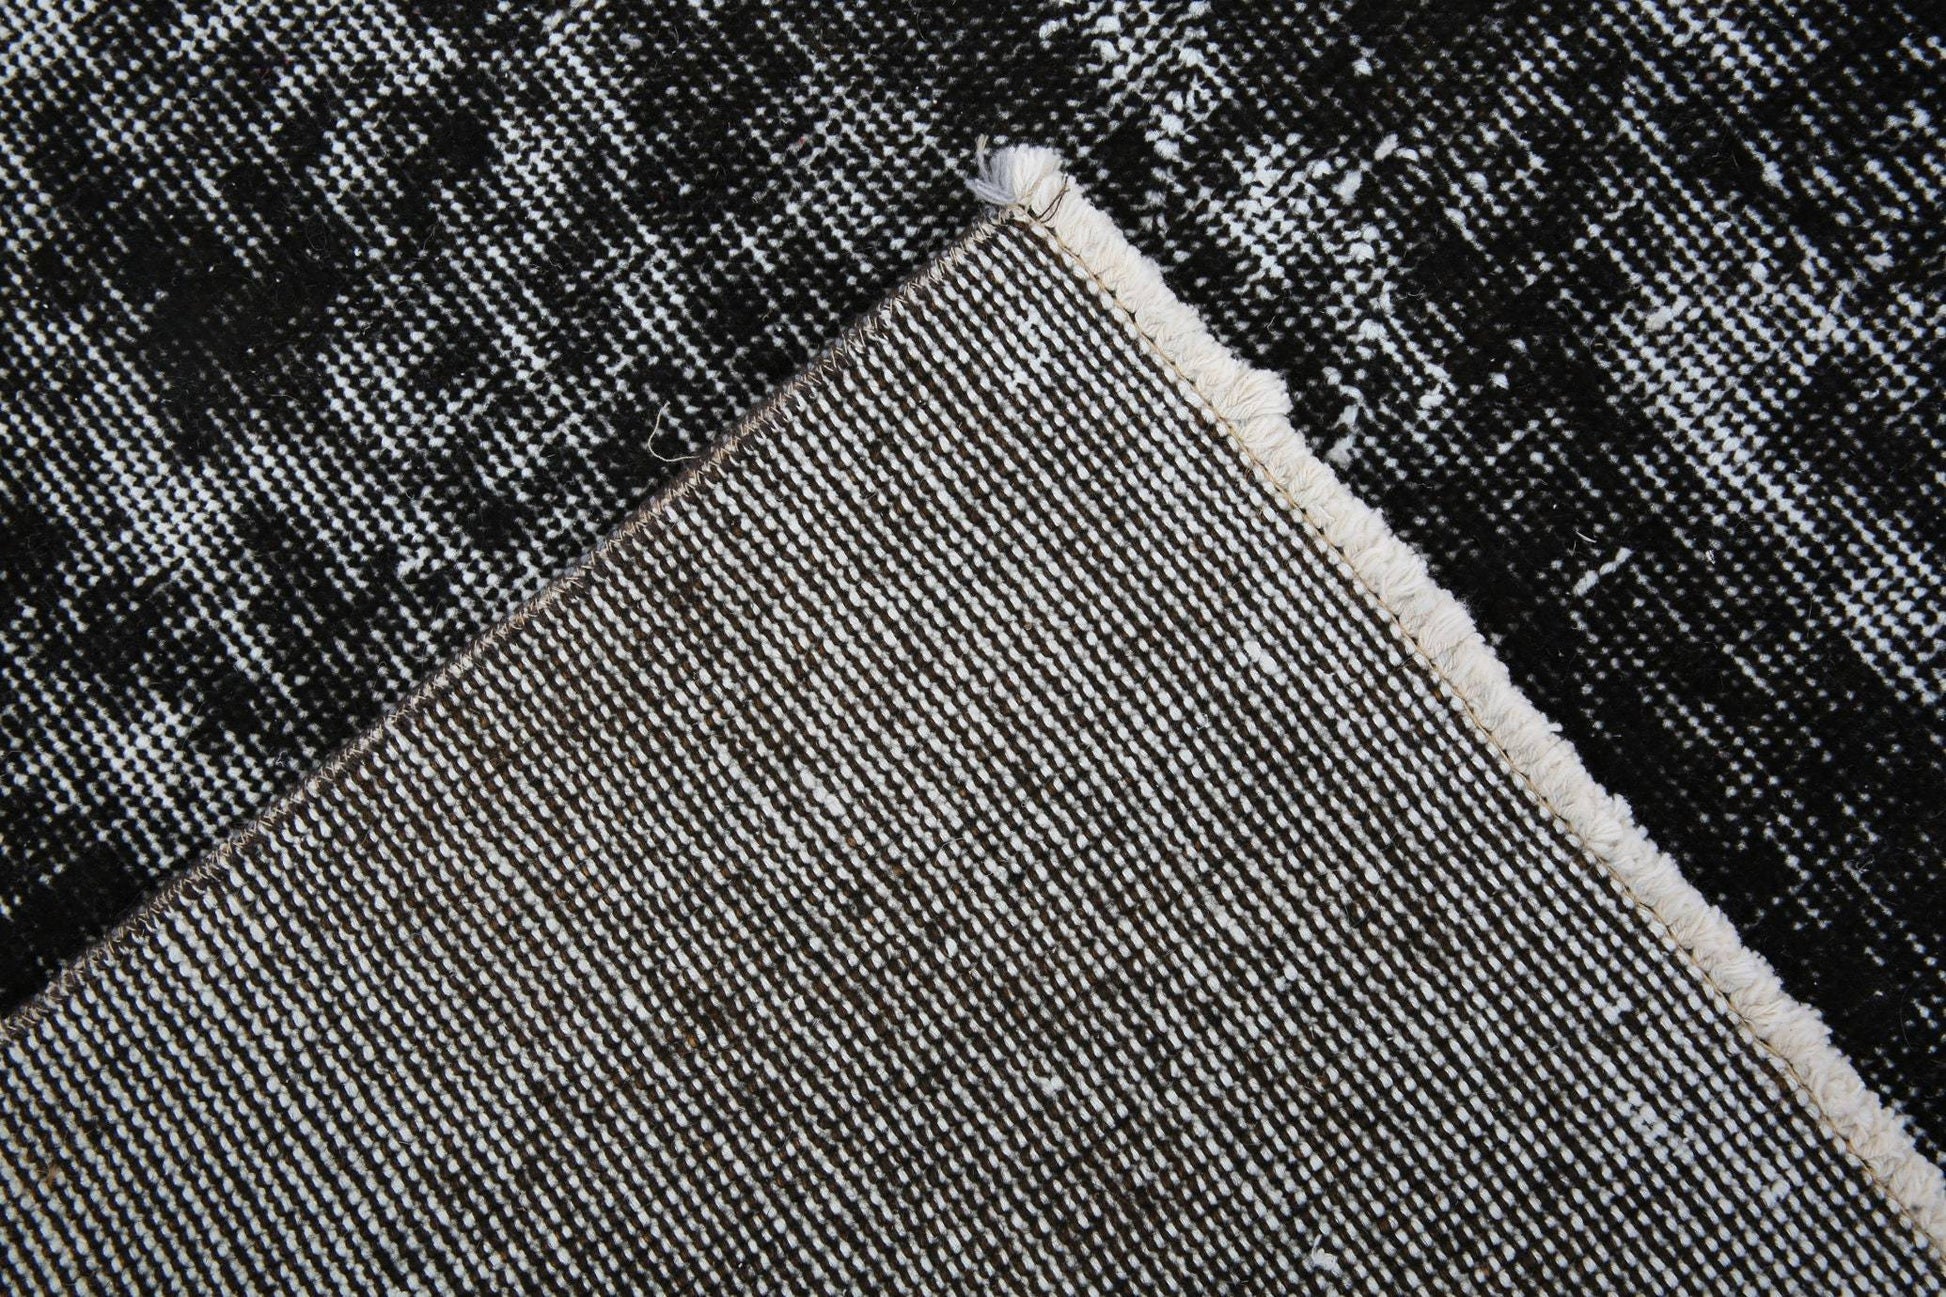 7' x 11' Black-Gray Turkish Vintage Rug  |  RugReform